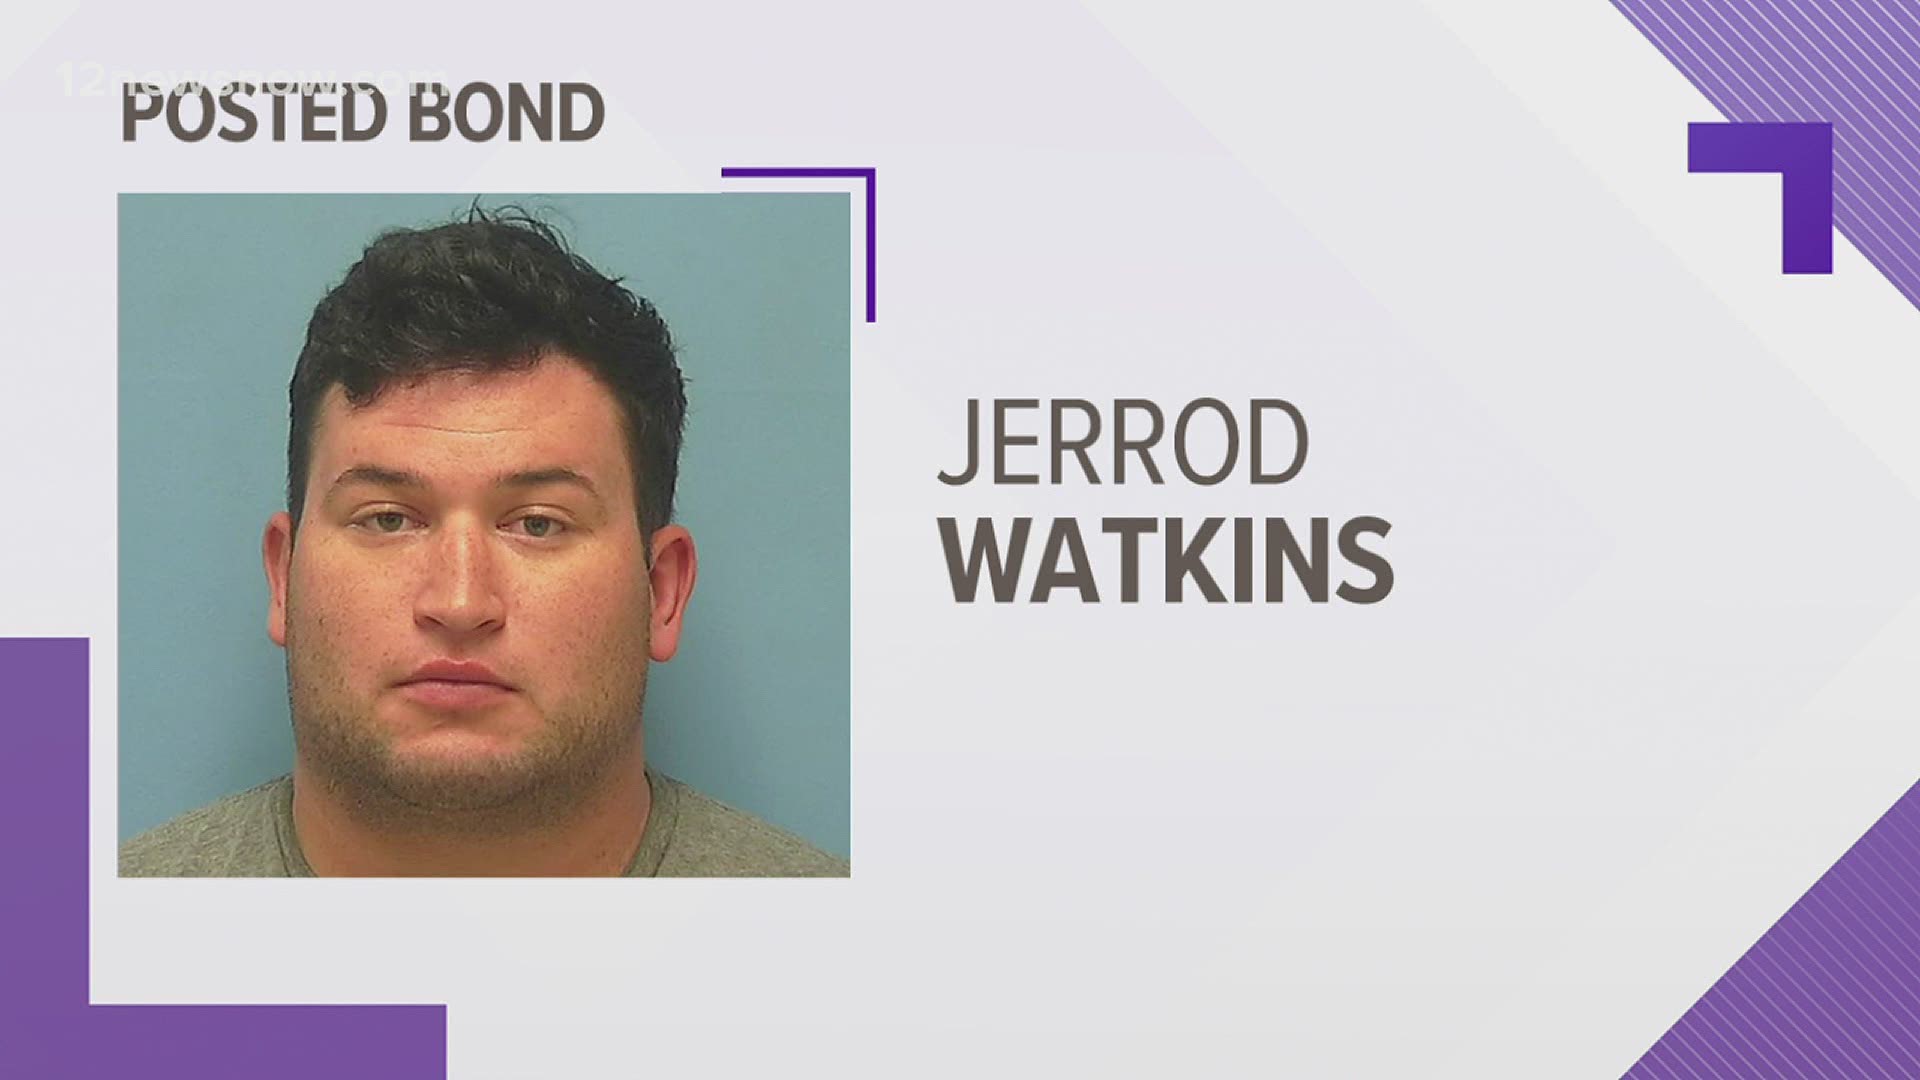 Jerrod Watkins, 23, posted a $100,000 bond